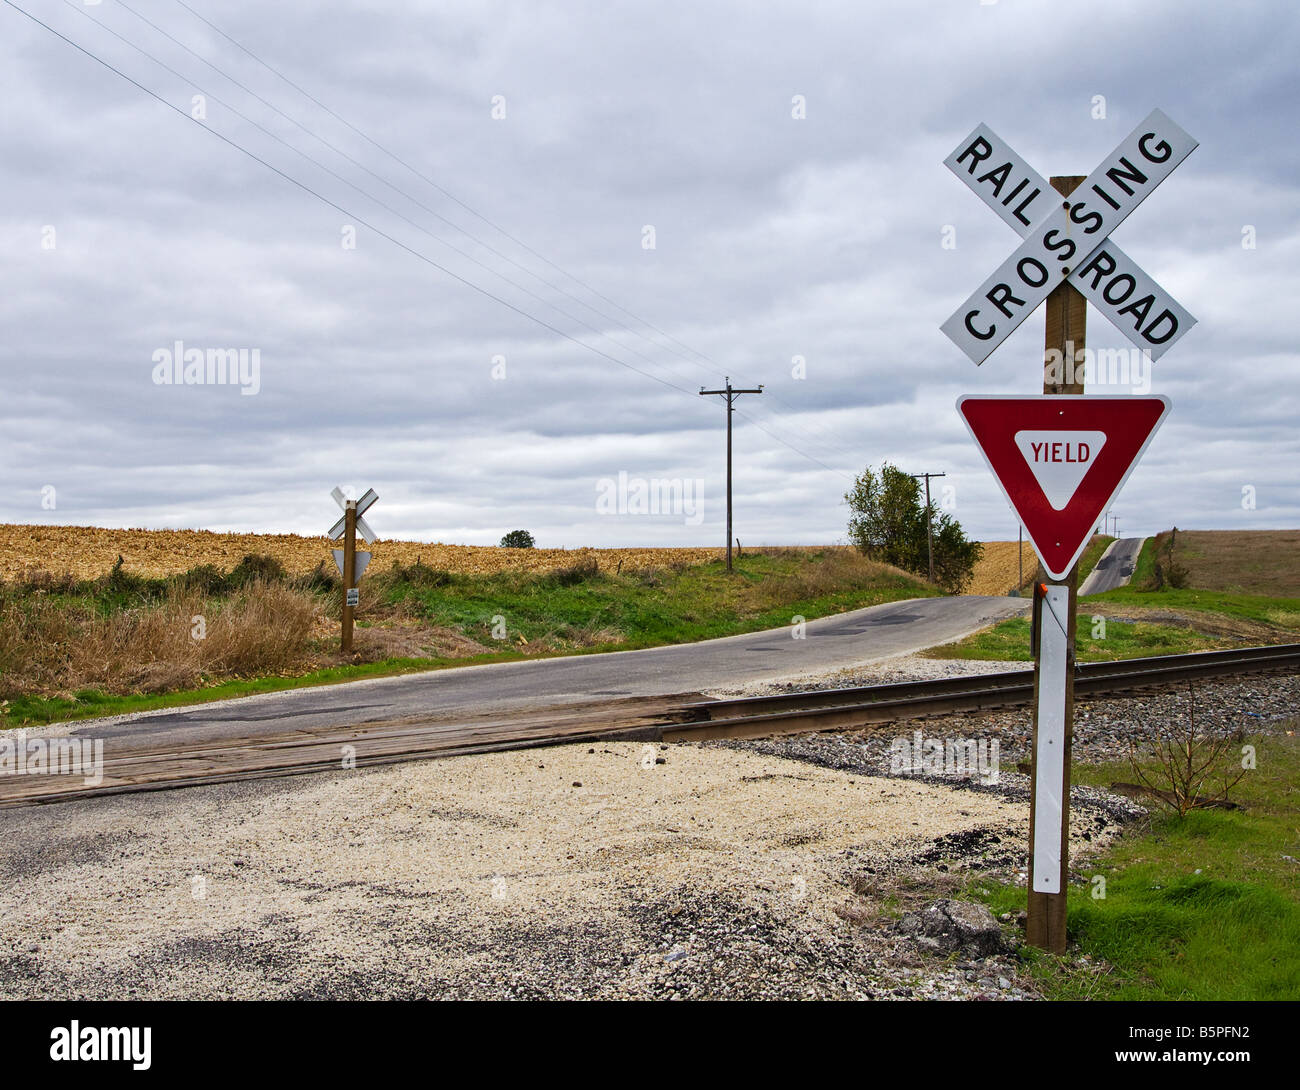 Railroad crossing along a rural road. Stock Photo